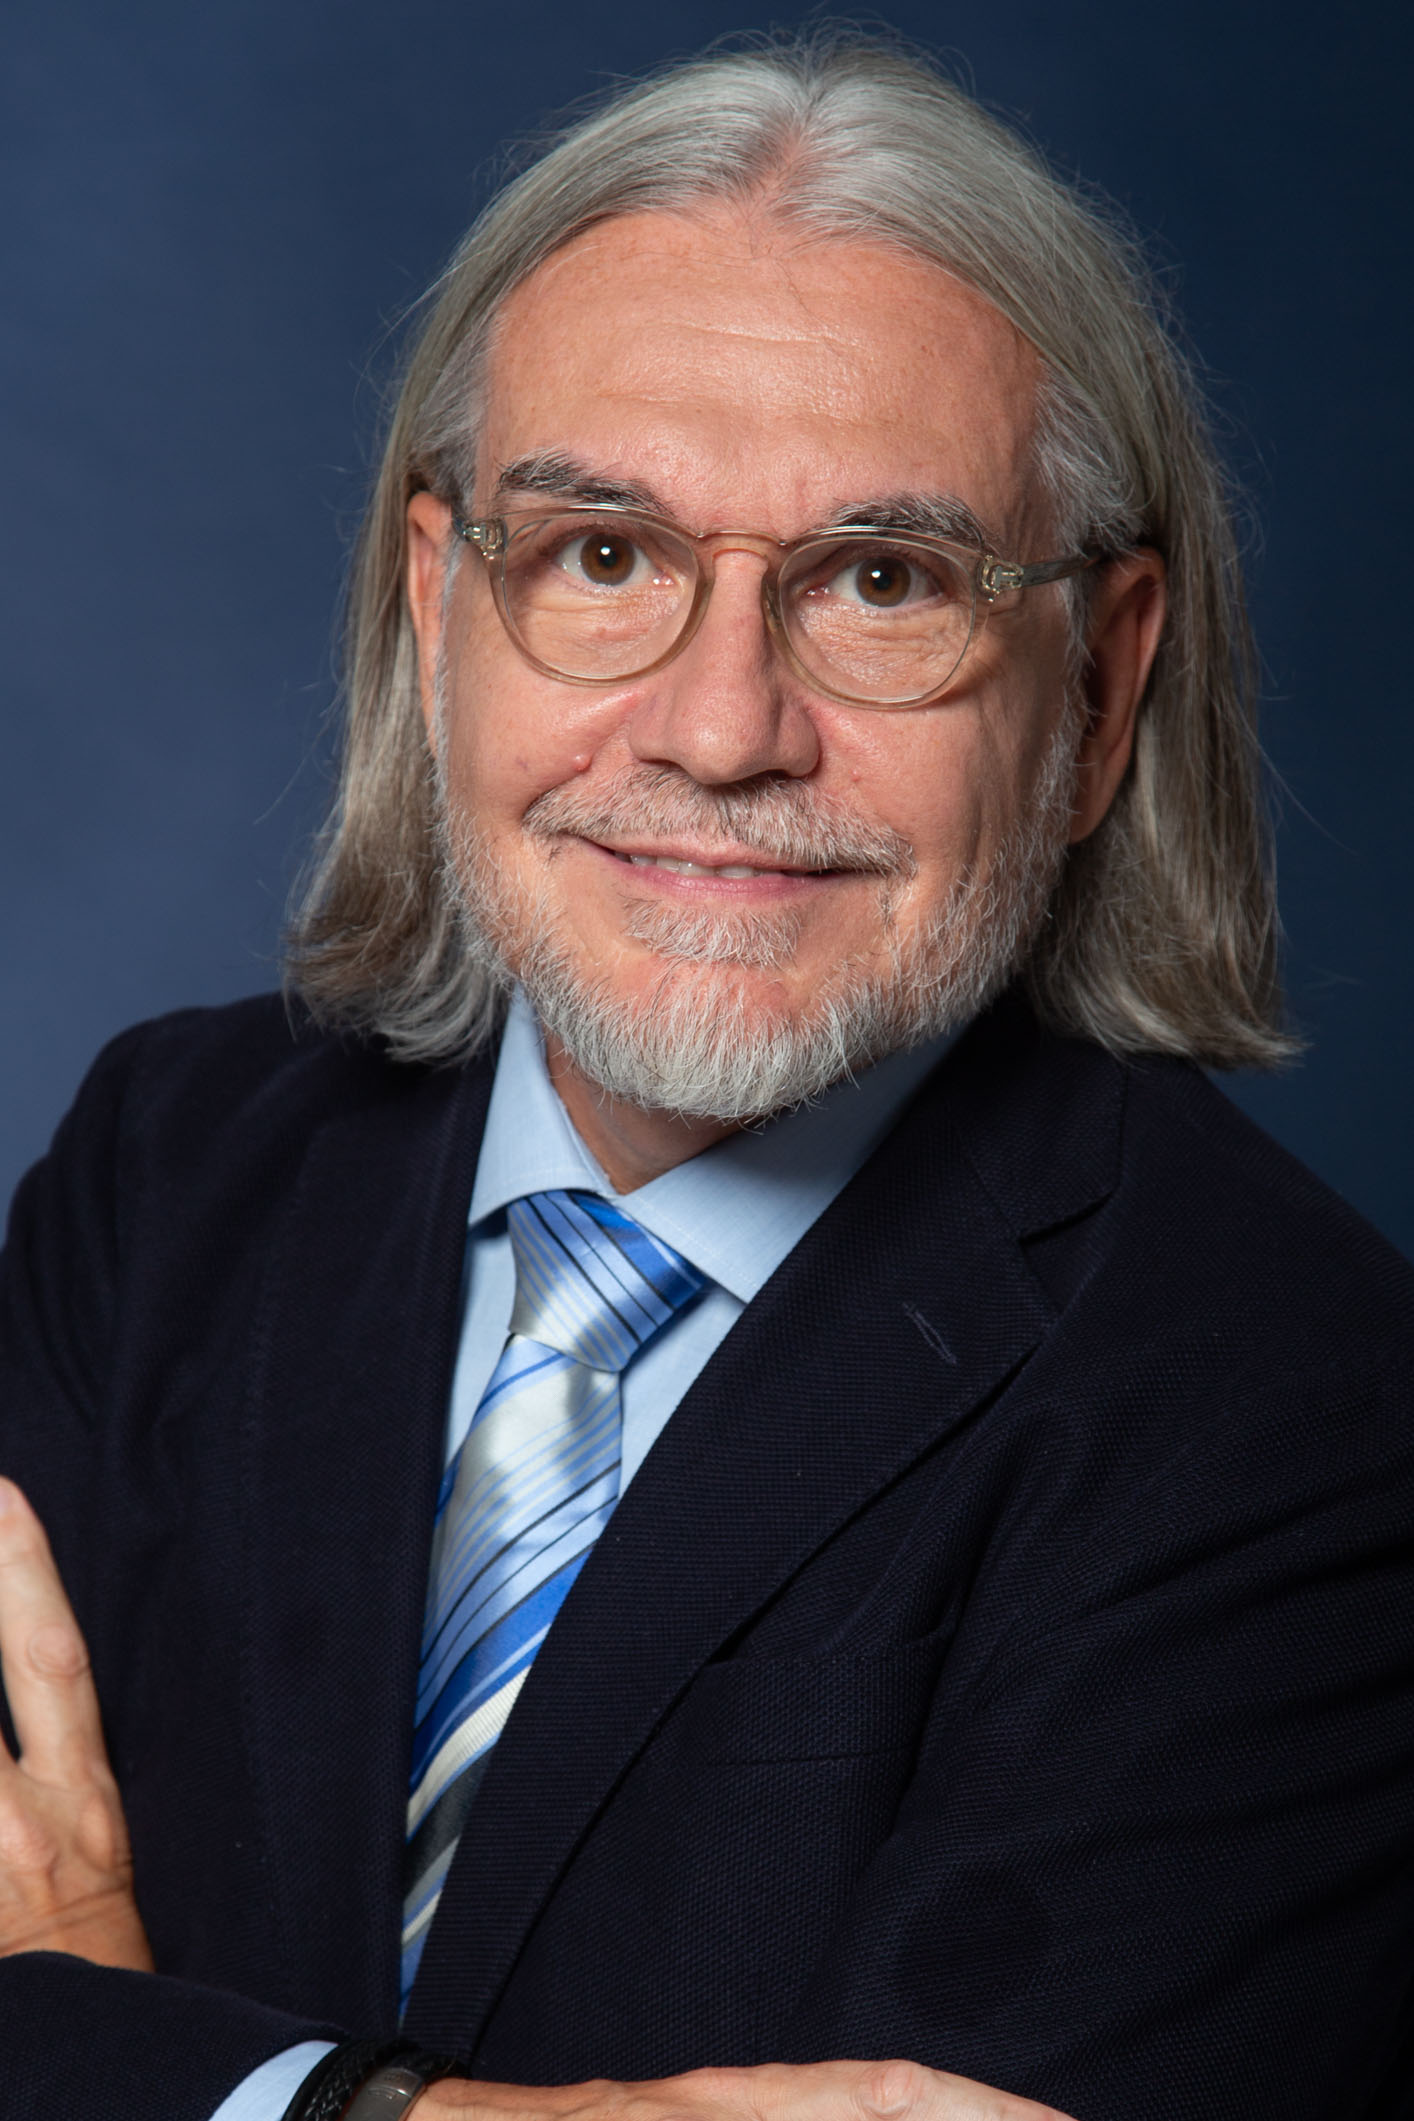 Jürgen W.G. Bentz, MD, PhD, MSc